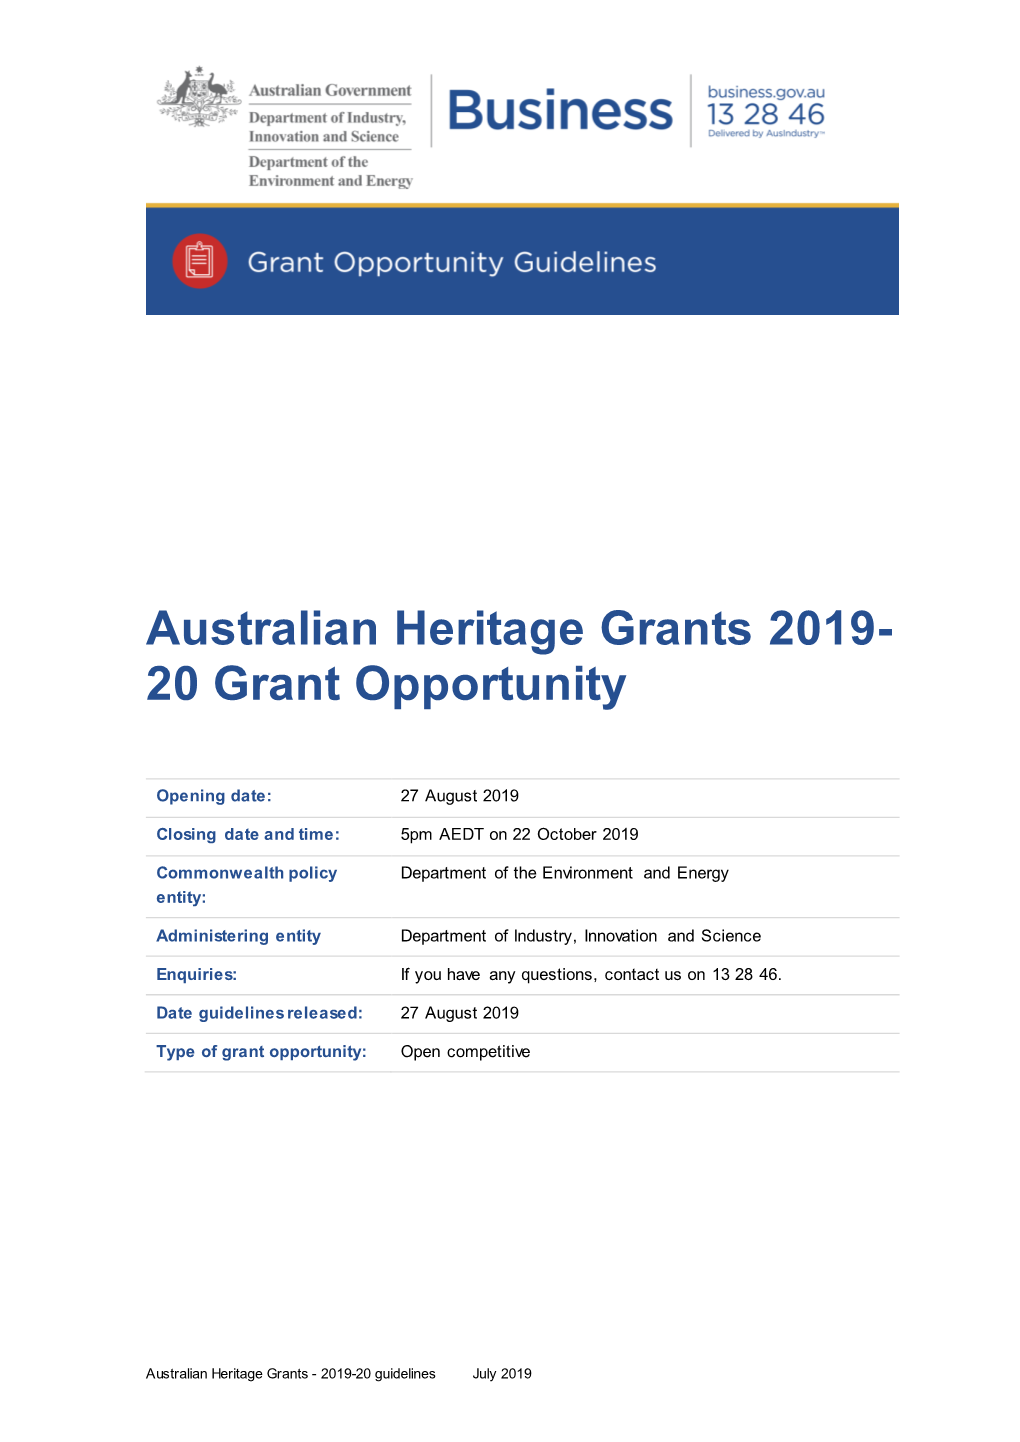 Australian Heritage Grants 2019- 20 Grant Opportunity